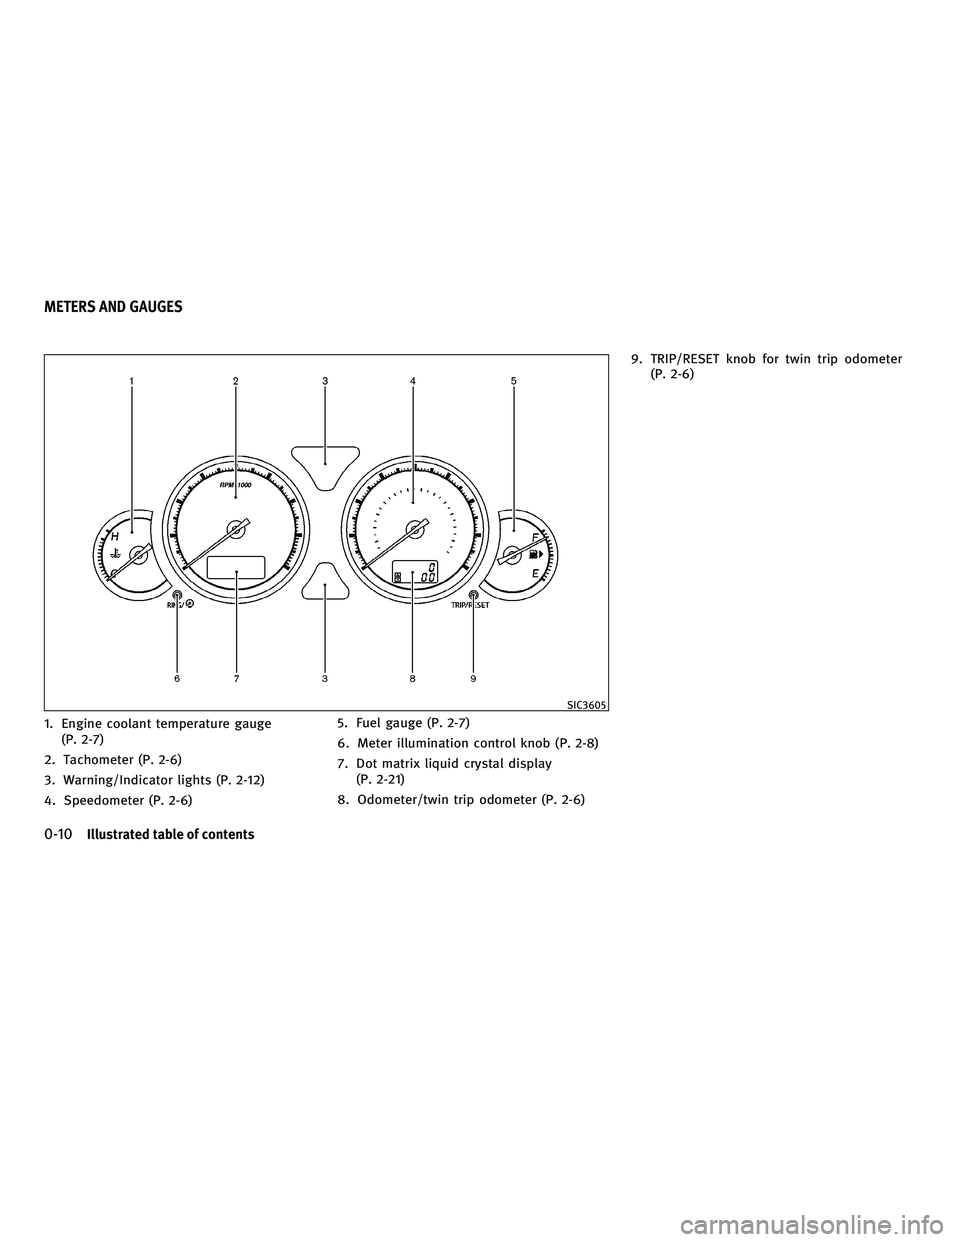 INFINITI M 2010  Owners Manual 1. Engine coolant temperature gauge(P. 2-7)
2. Tachometer (P. 2-6)
3. Warning/Indicator lights (P. 2-12)
4. Speedometer (P. 2-6) 5. Fuel gauge (P. 2-7)
6. Meter illumination control knob (P. 2-8)
7. D